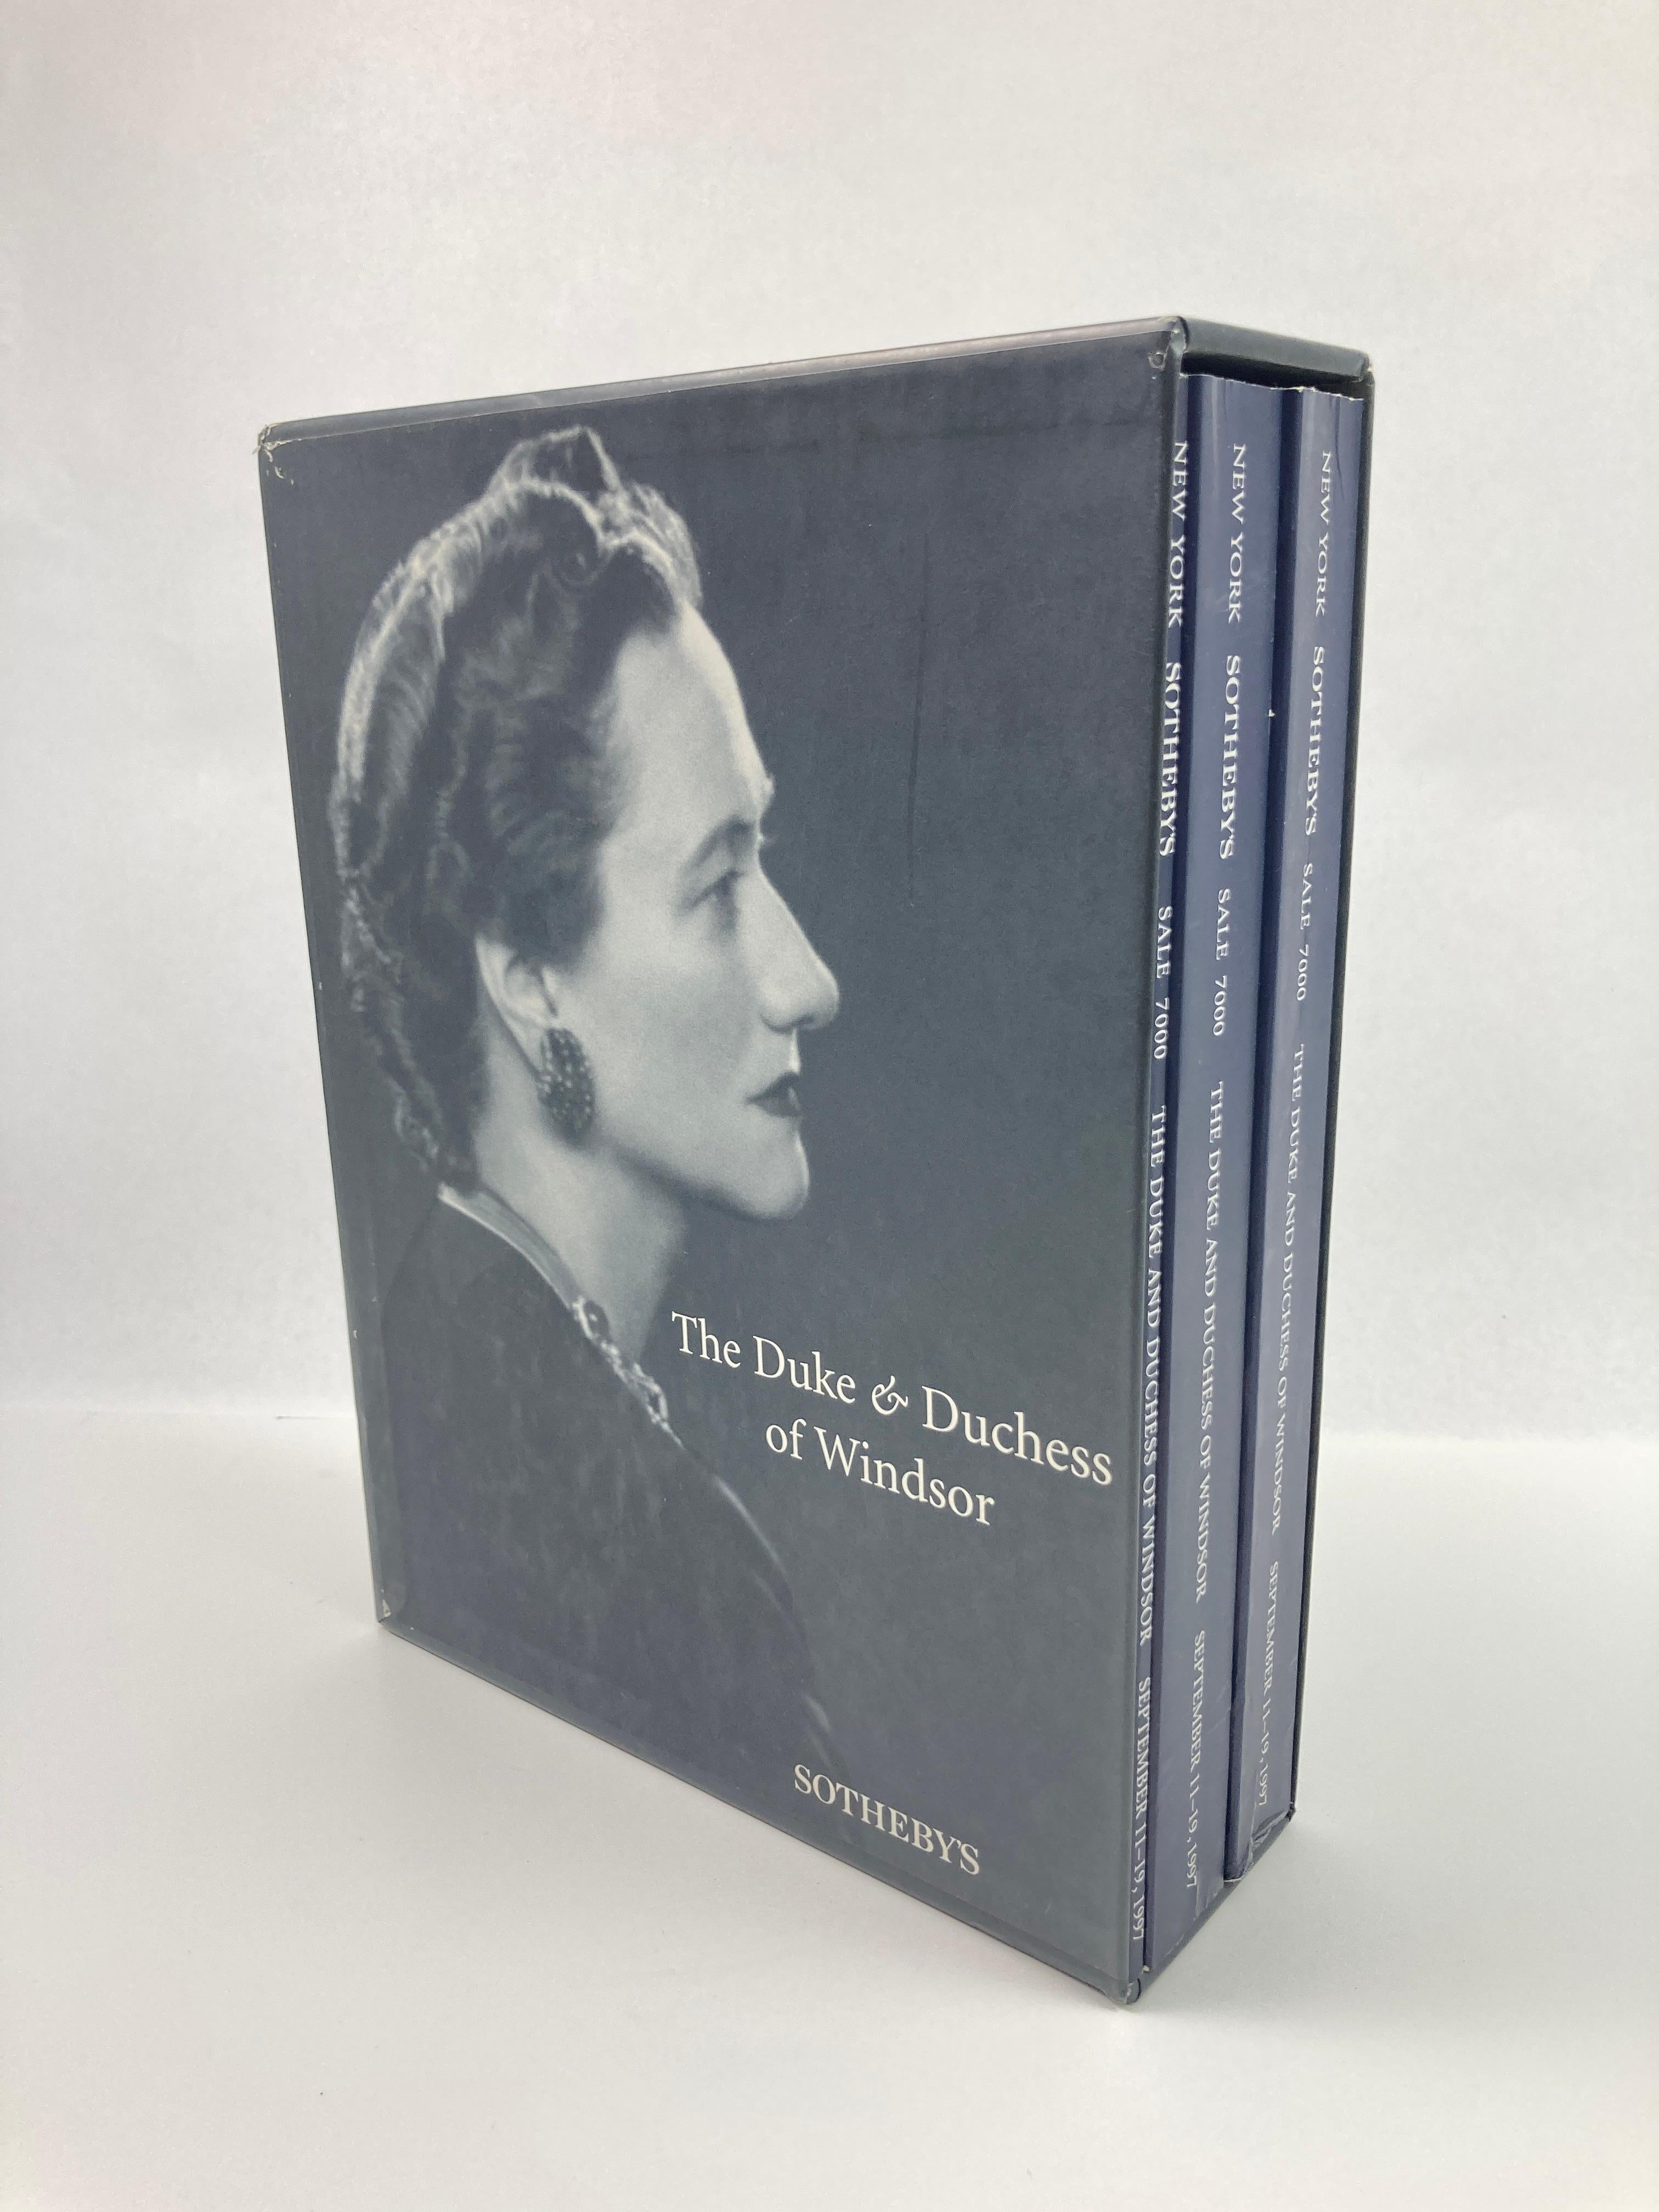 The Duke and Duchess of Windsor Auction Sothebys Books Catalogs in Slipcase Box 2